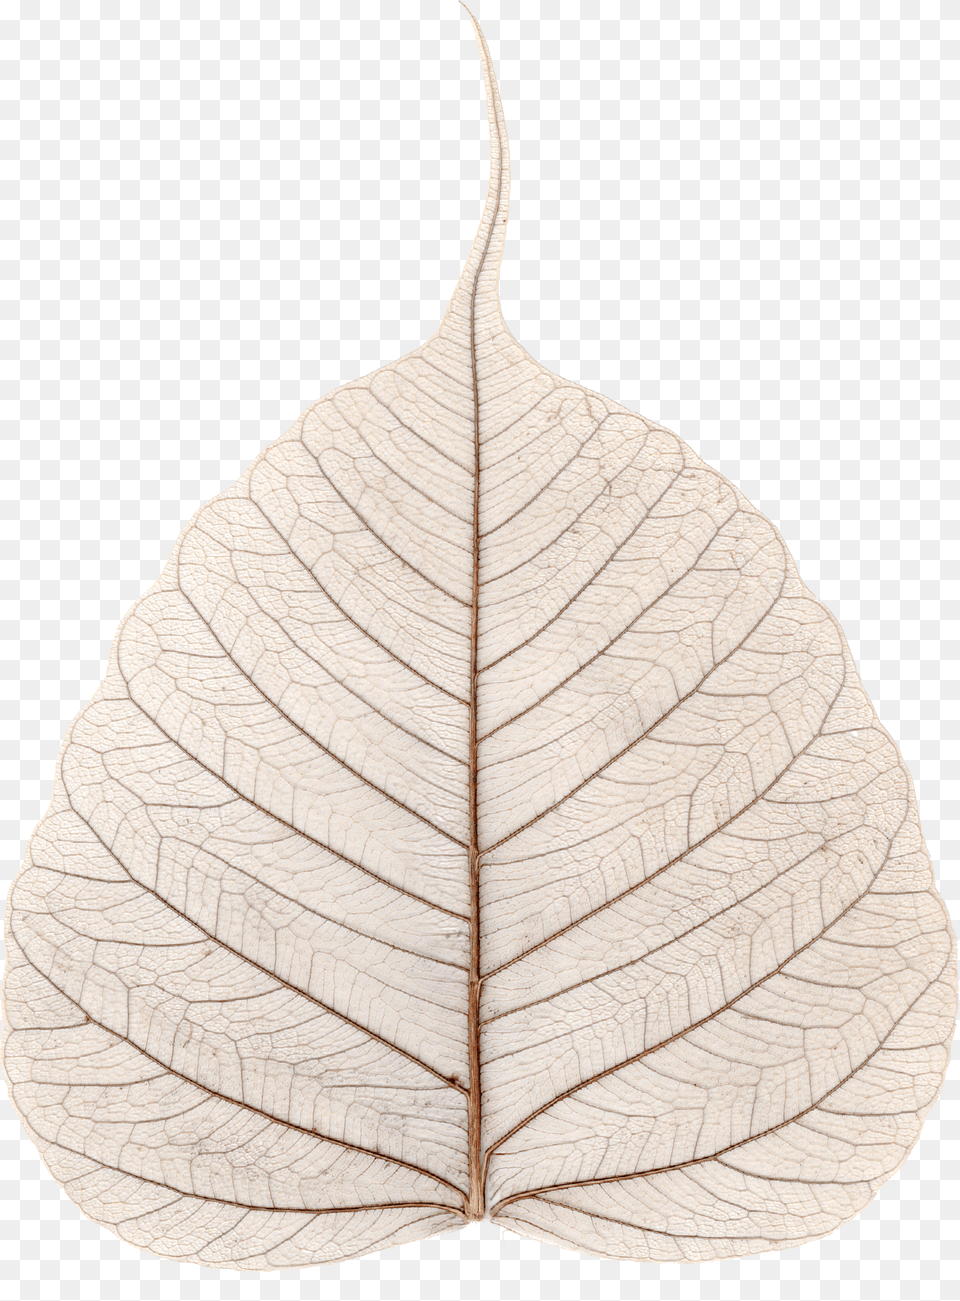 File Skeletonized Leaf Ficus Religiosa Kolkata Png Image